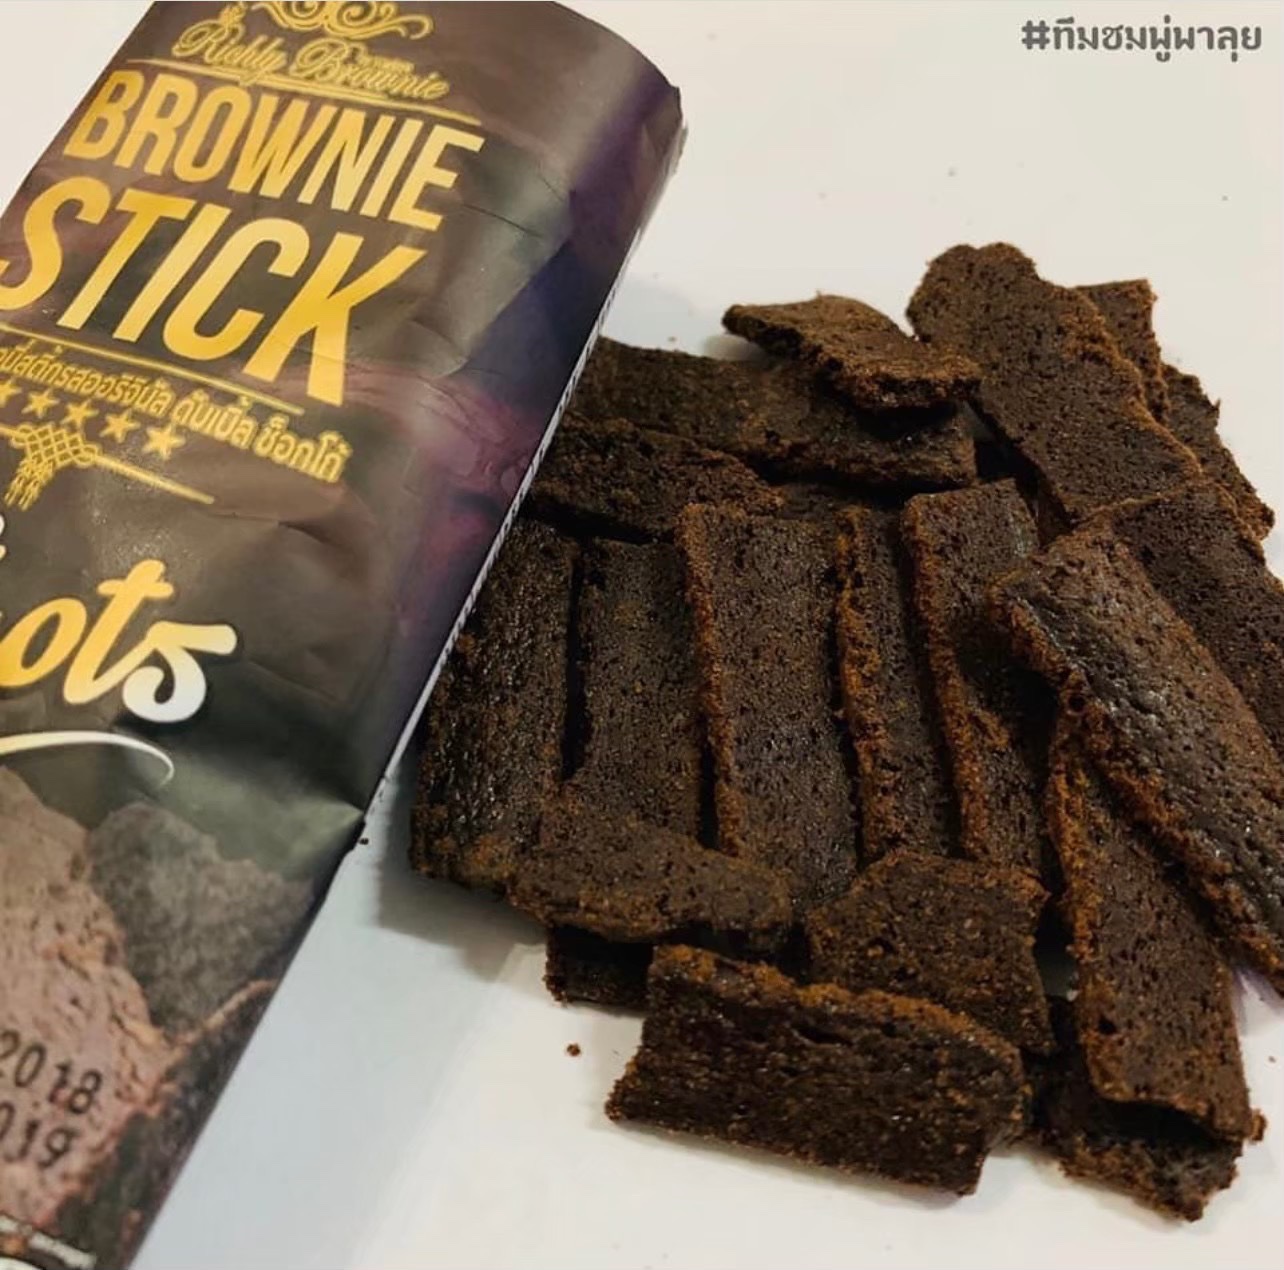 【BROWNIE STICK】布朗尼脆片餅乾20g 熱銷人氣泰國零食